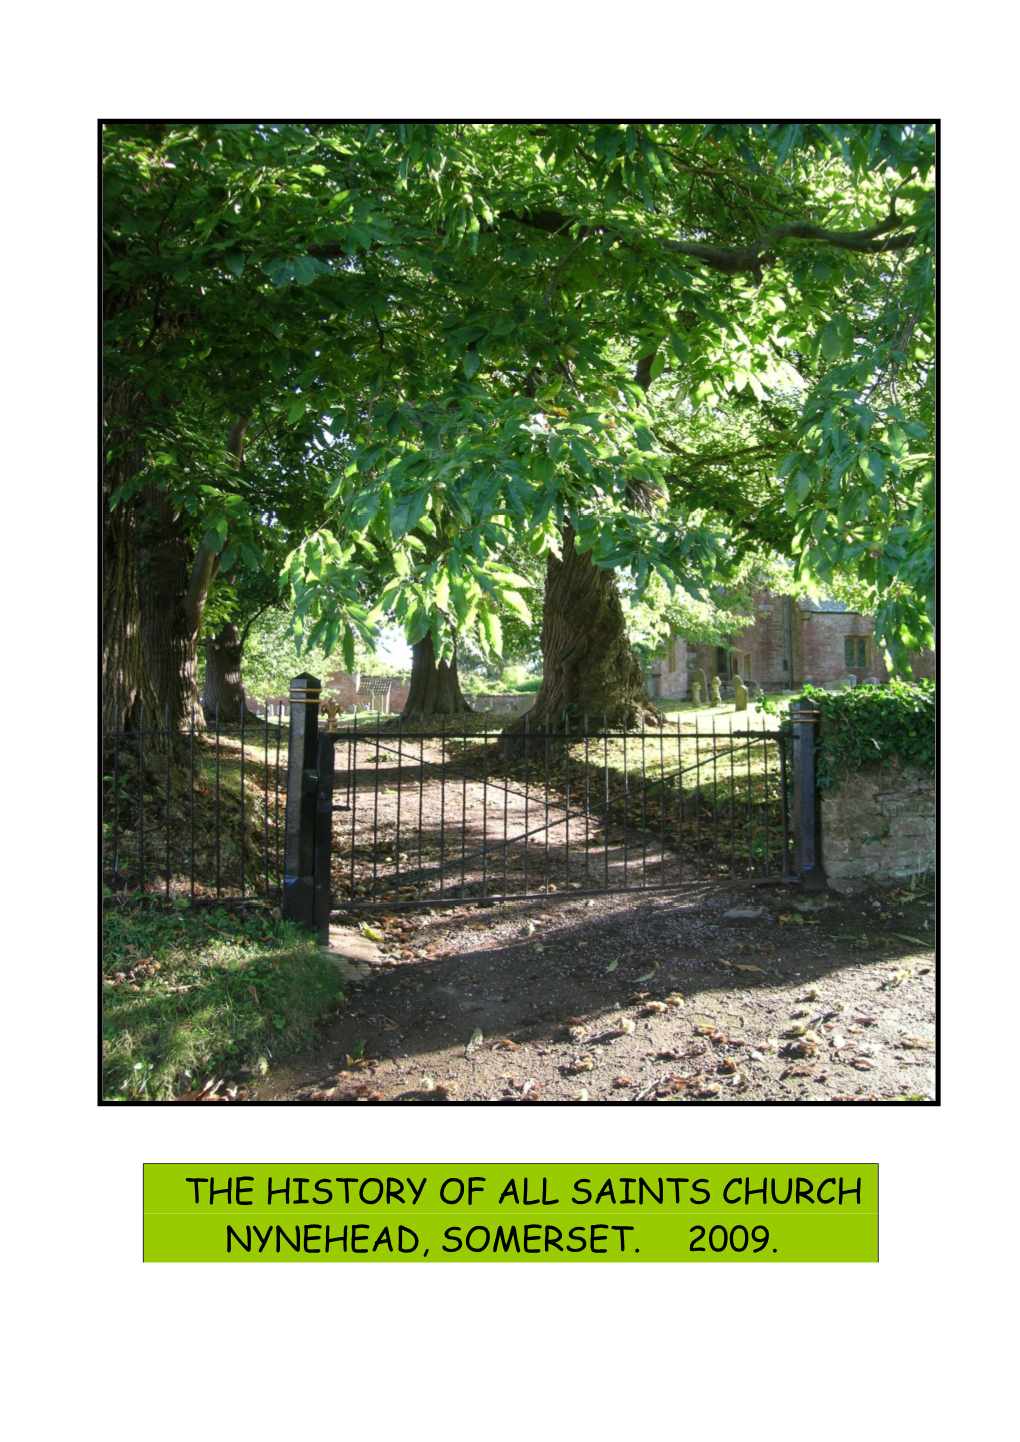 The History of All Saints Church Nynehead, Somerset